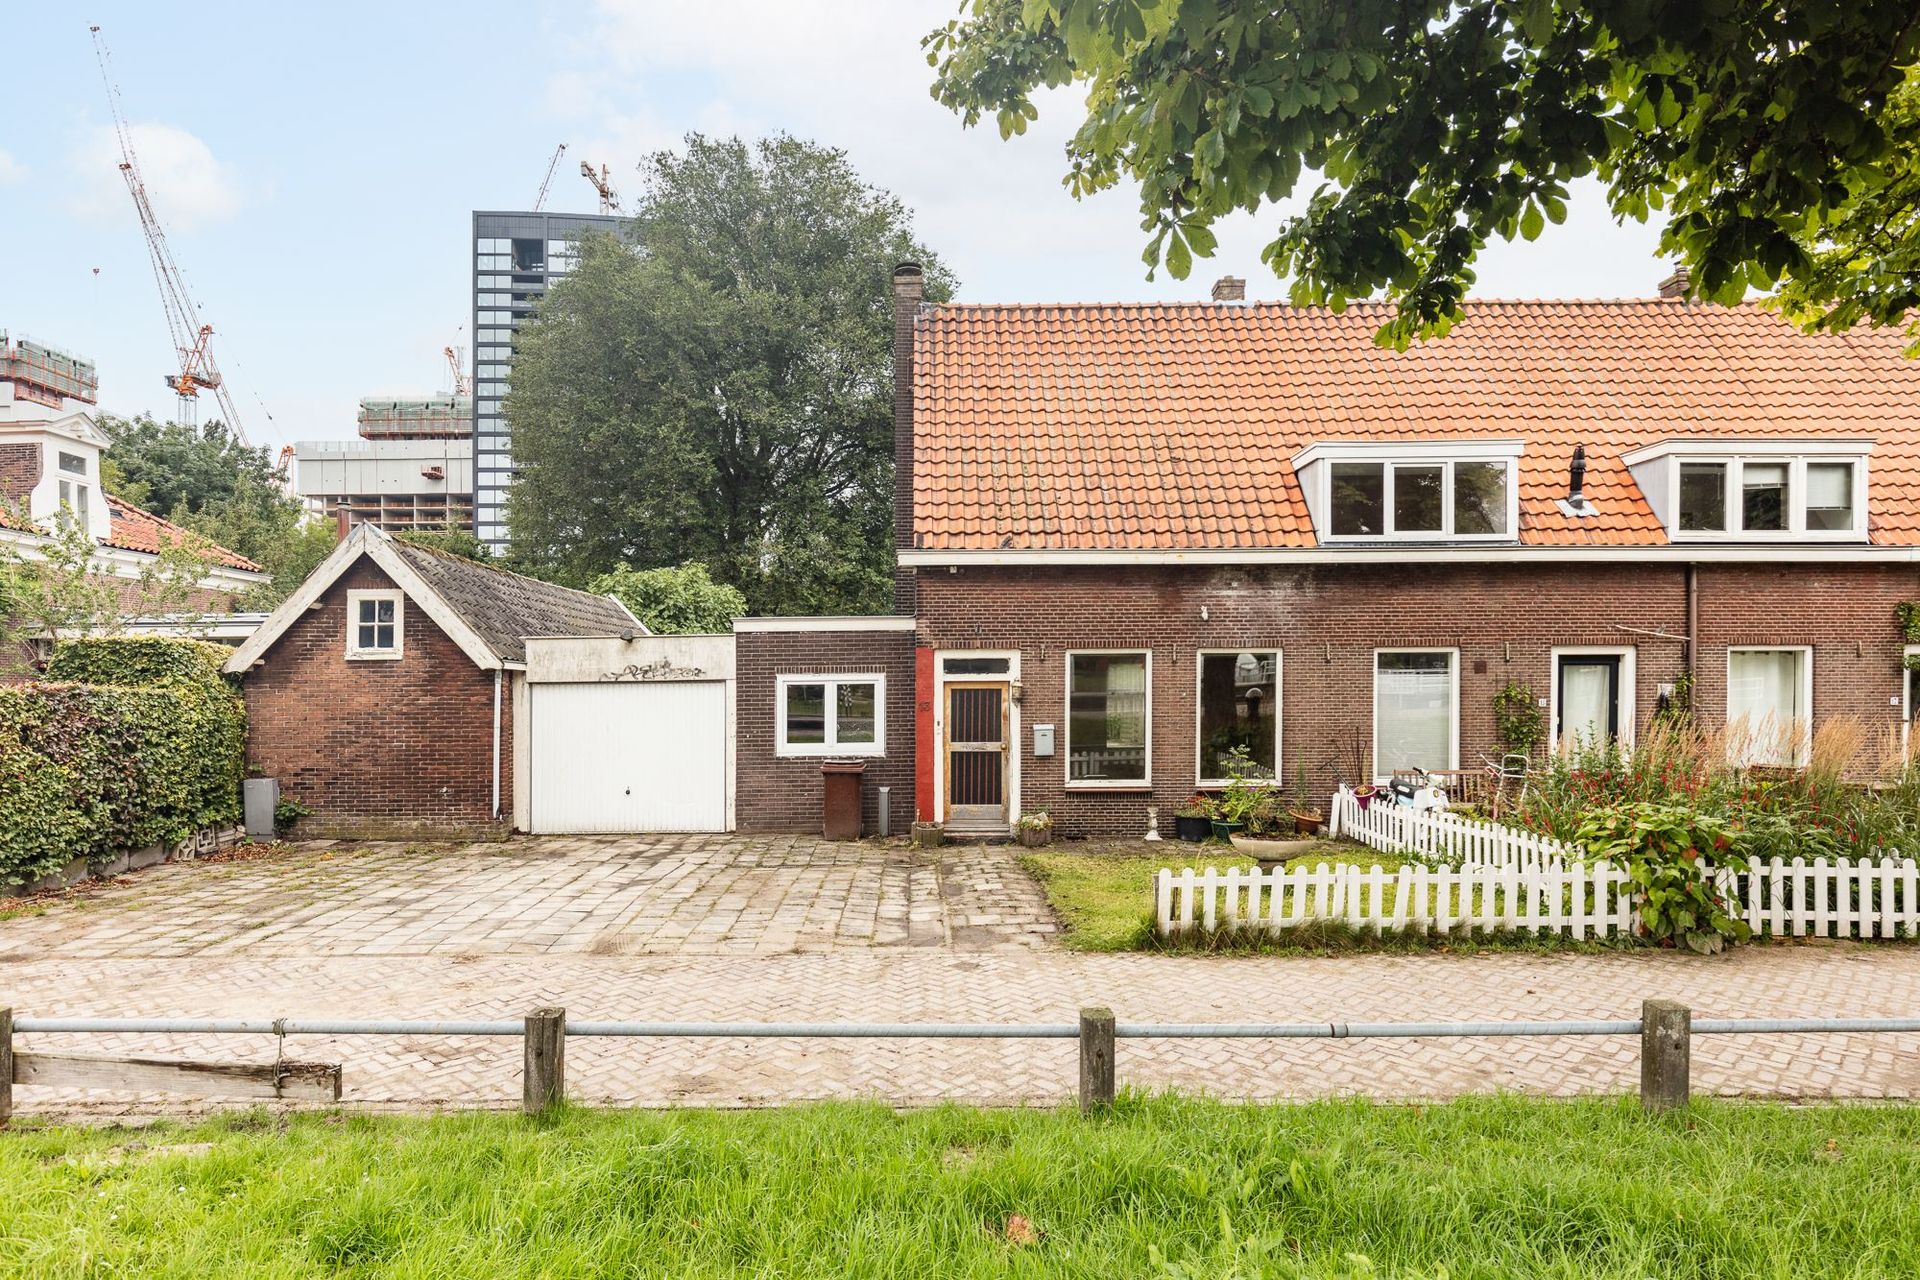 wenkbrauw Veilig bord Vervallen hoekwoning in Amsterdam te koop voor 1 miljoen euro(!) | GvH